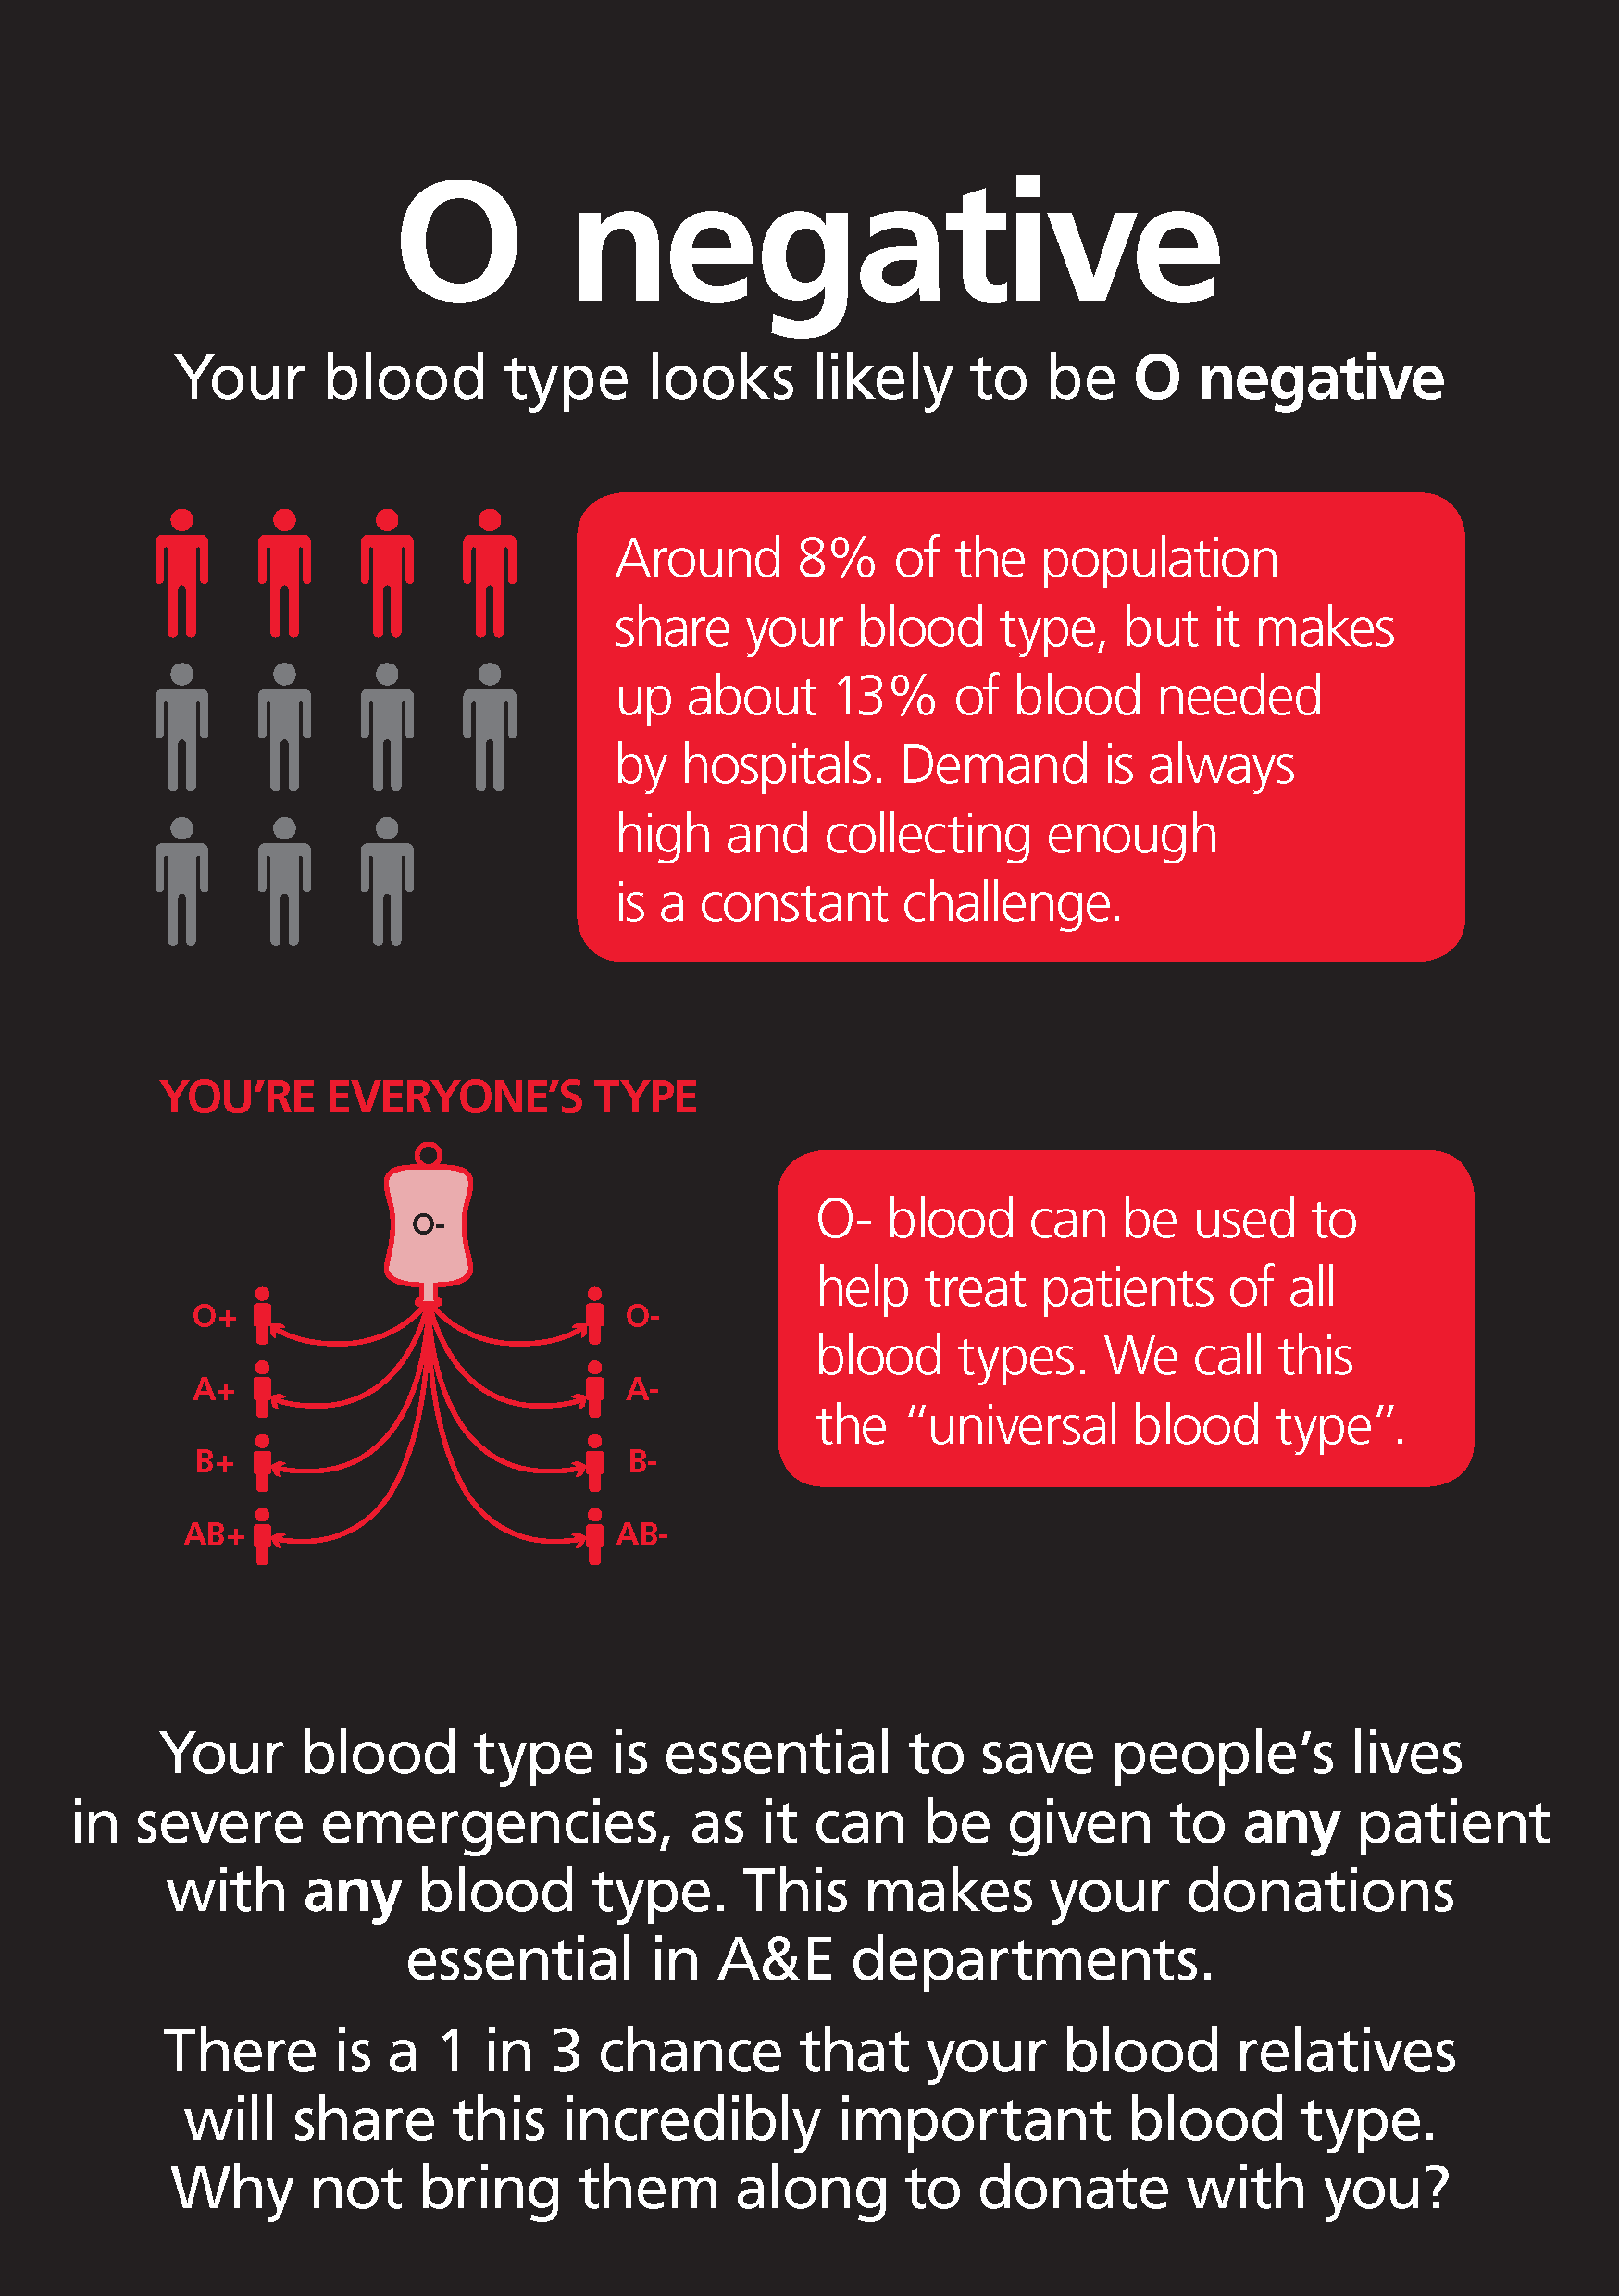 o negative blood type receive